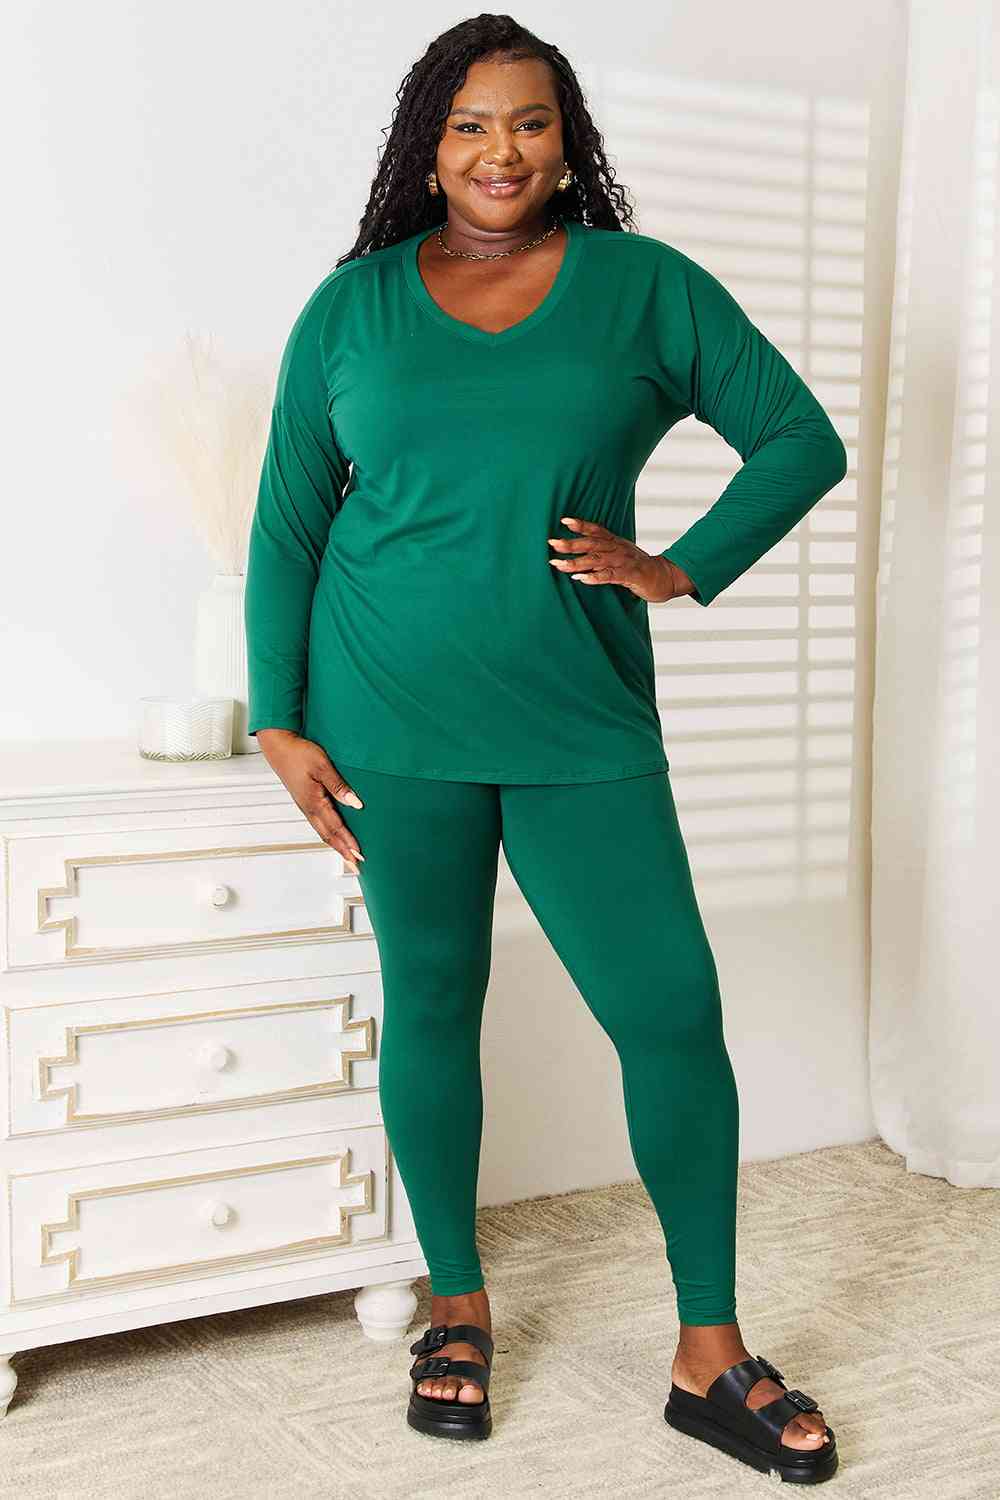 Zenana Lazy Days Full Size Long Sleeve Top and Leggings Set jehouze Dark Green S 